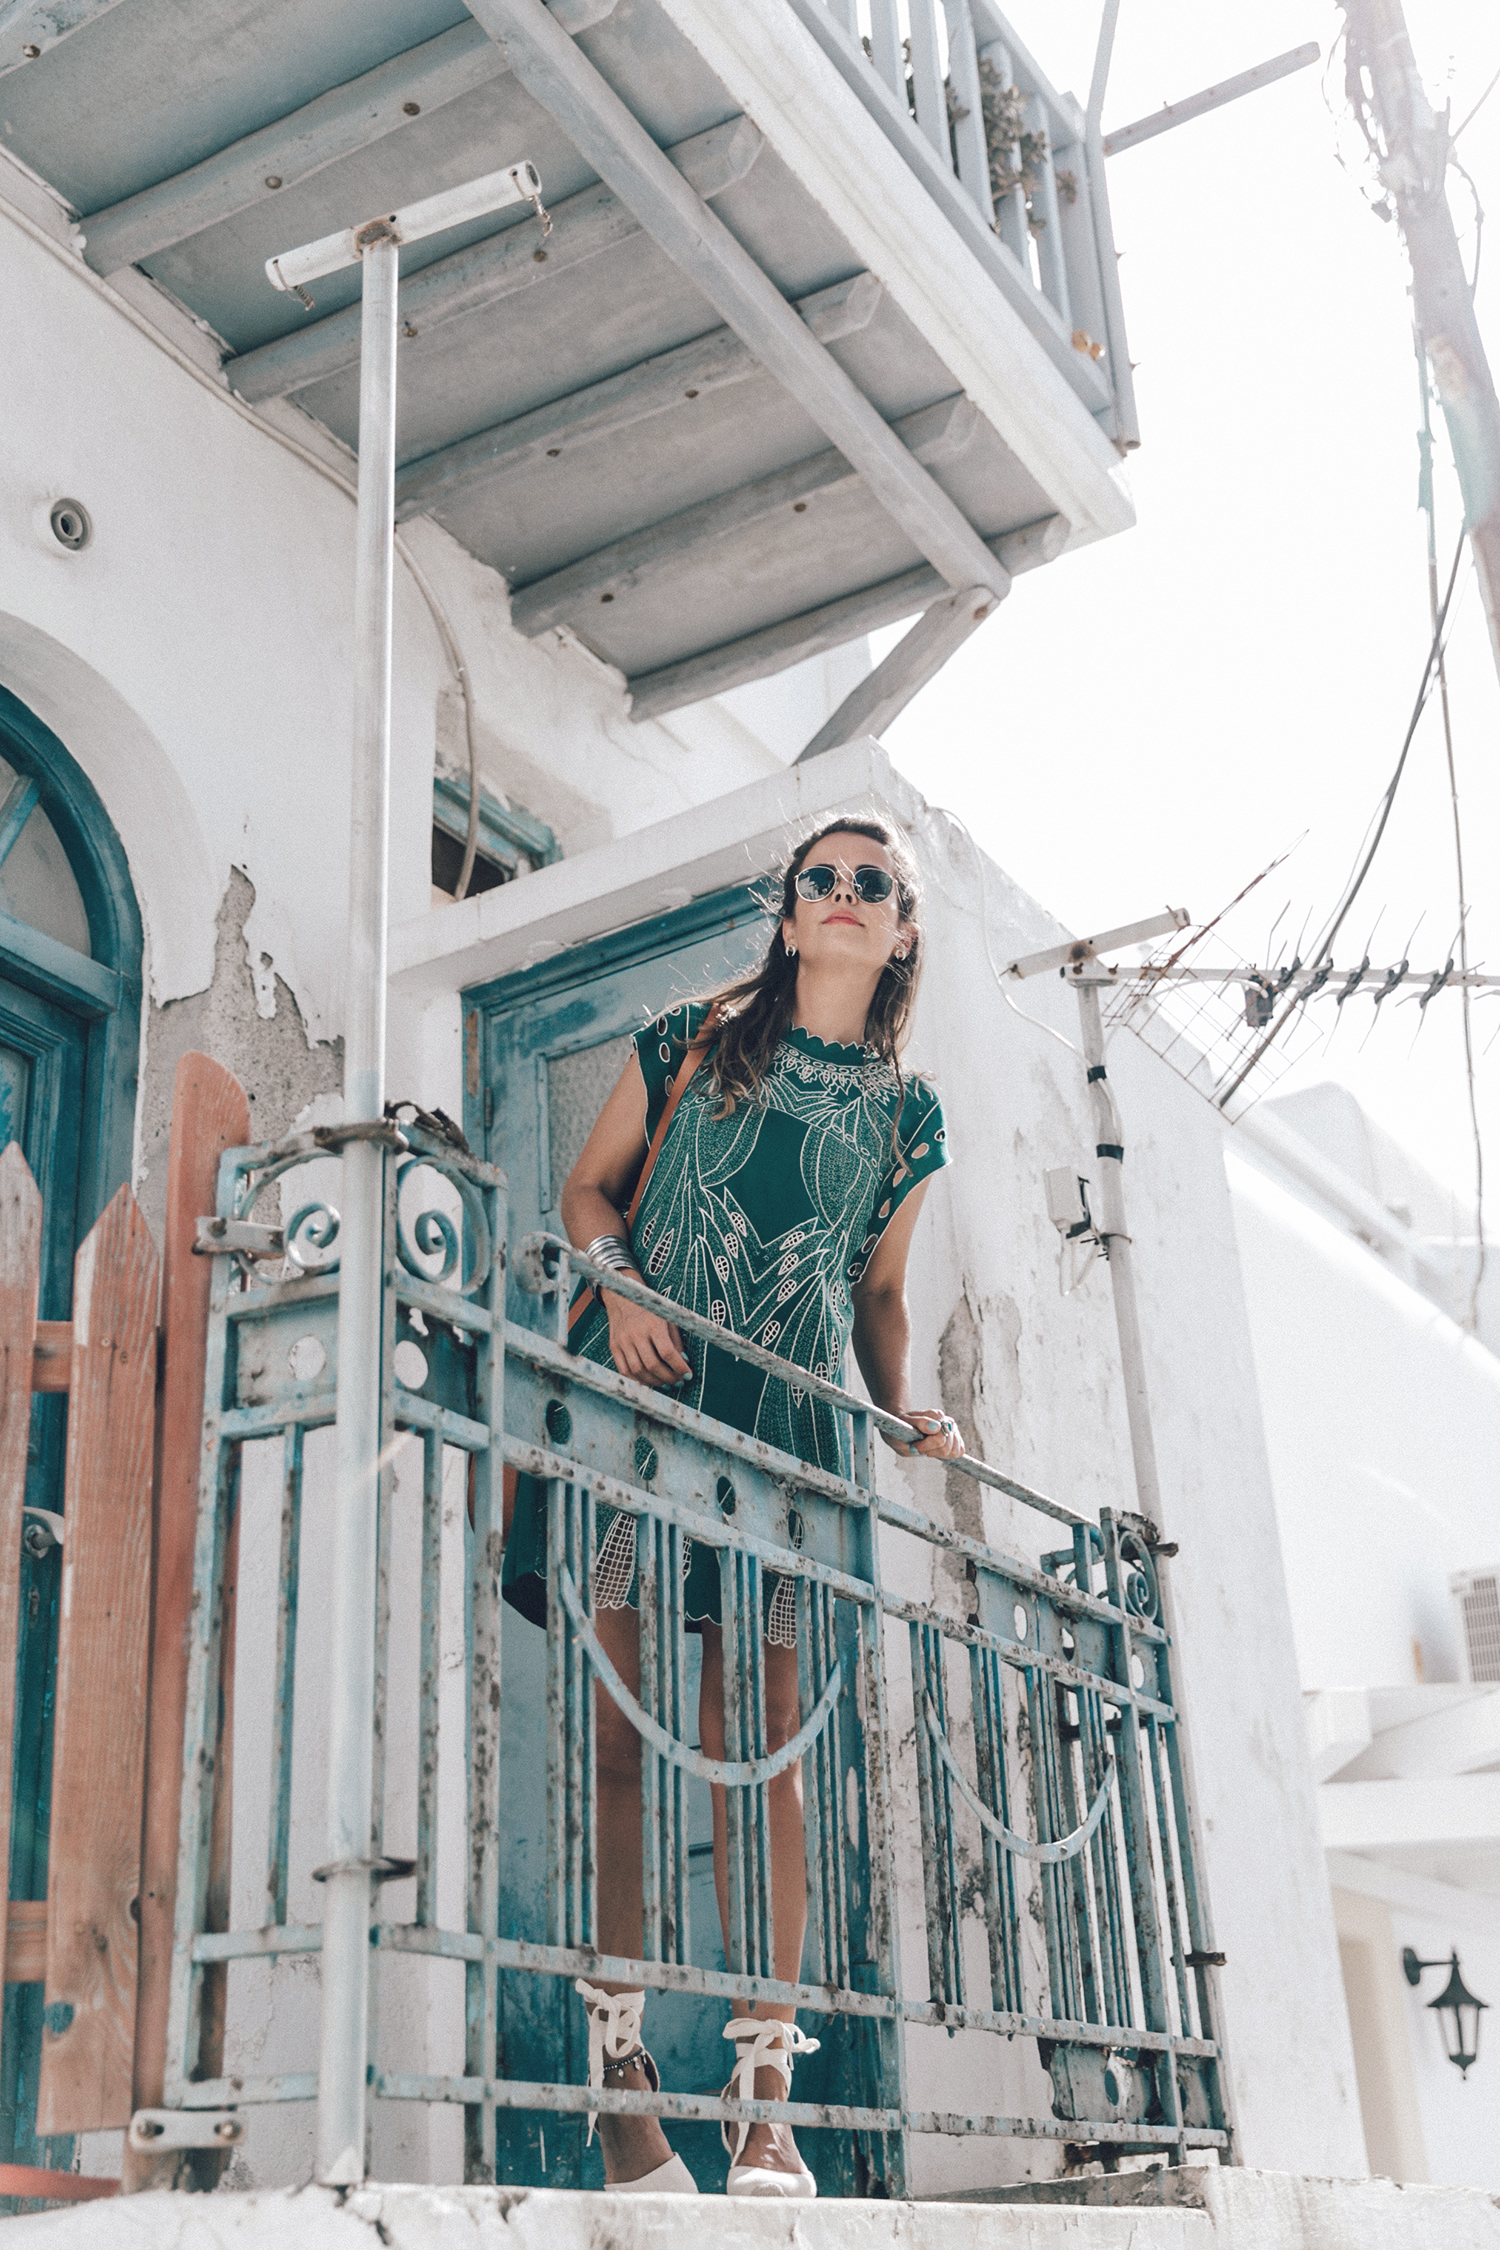 Tularosa_Dress-Soludos_Escapes-Soludos_Espadrilles-Sezane_Bag-Leather_Crossbody_Bag-Boho_Outfit-Look-Ray_Ban-Street_Style-Mykonos-Greece-Collage_Vintage-27